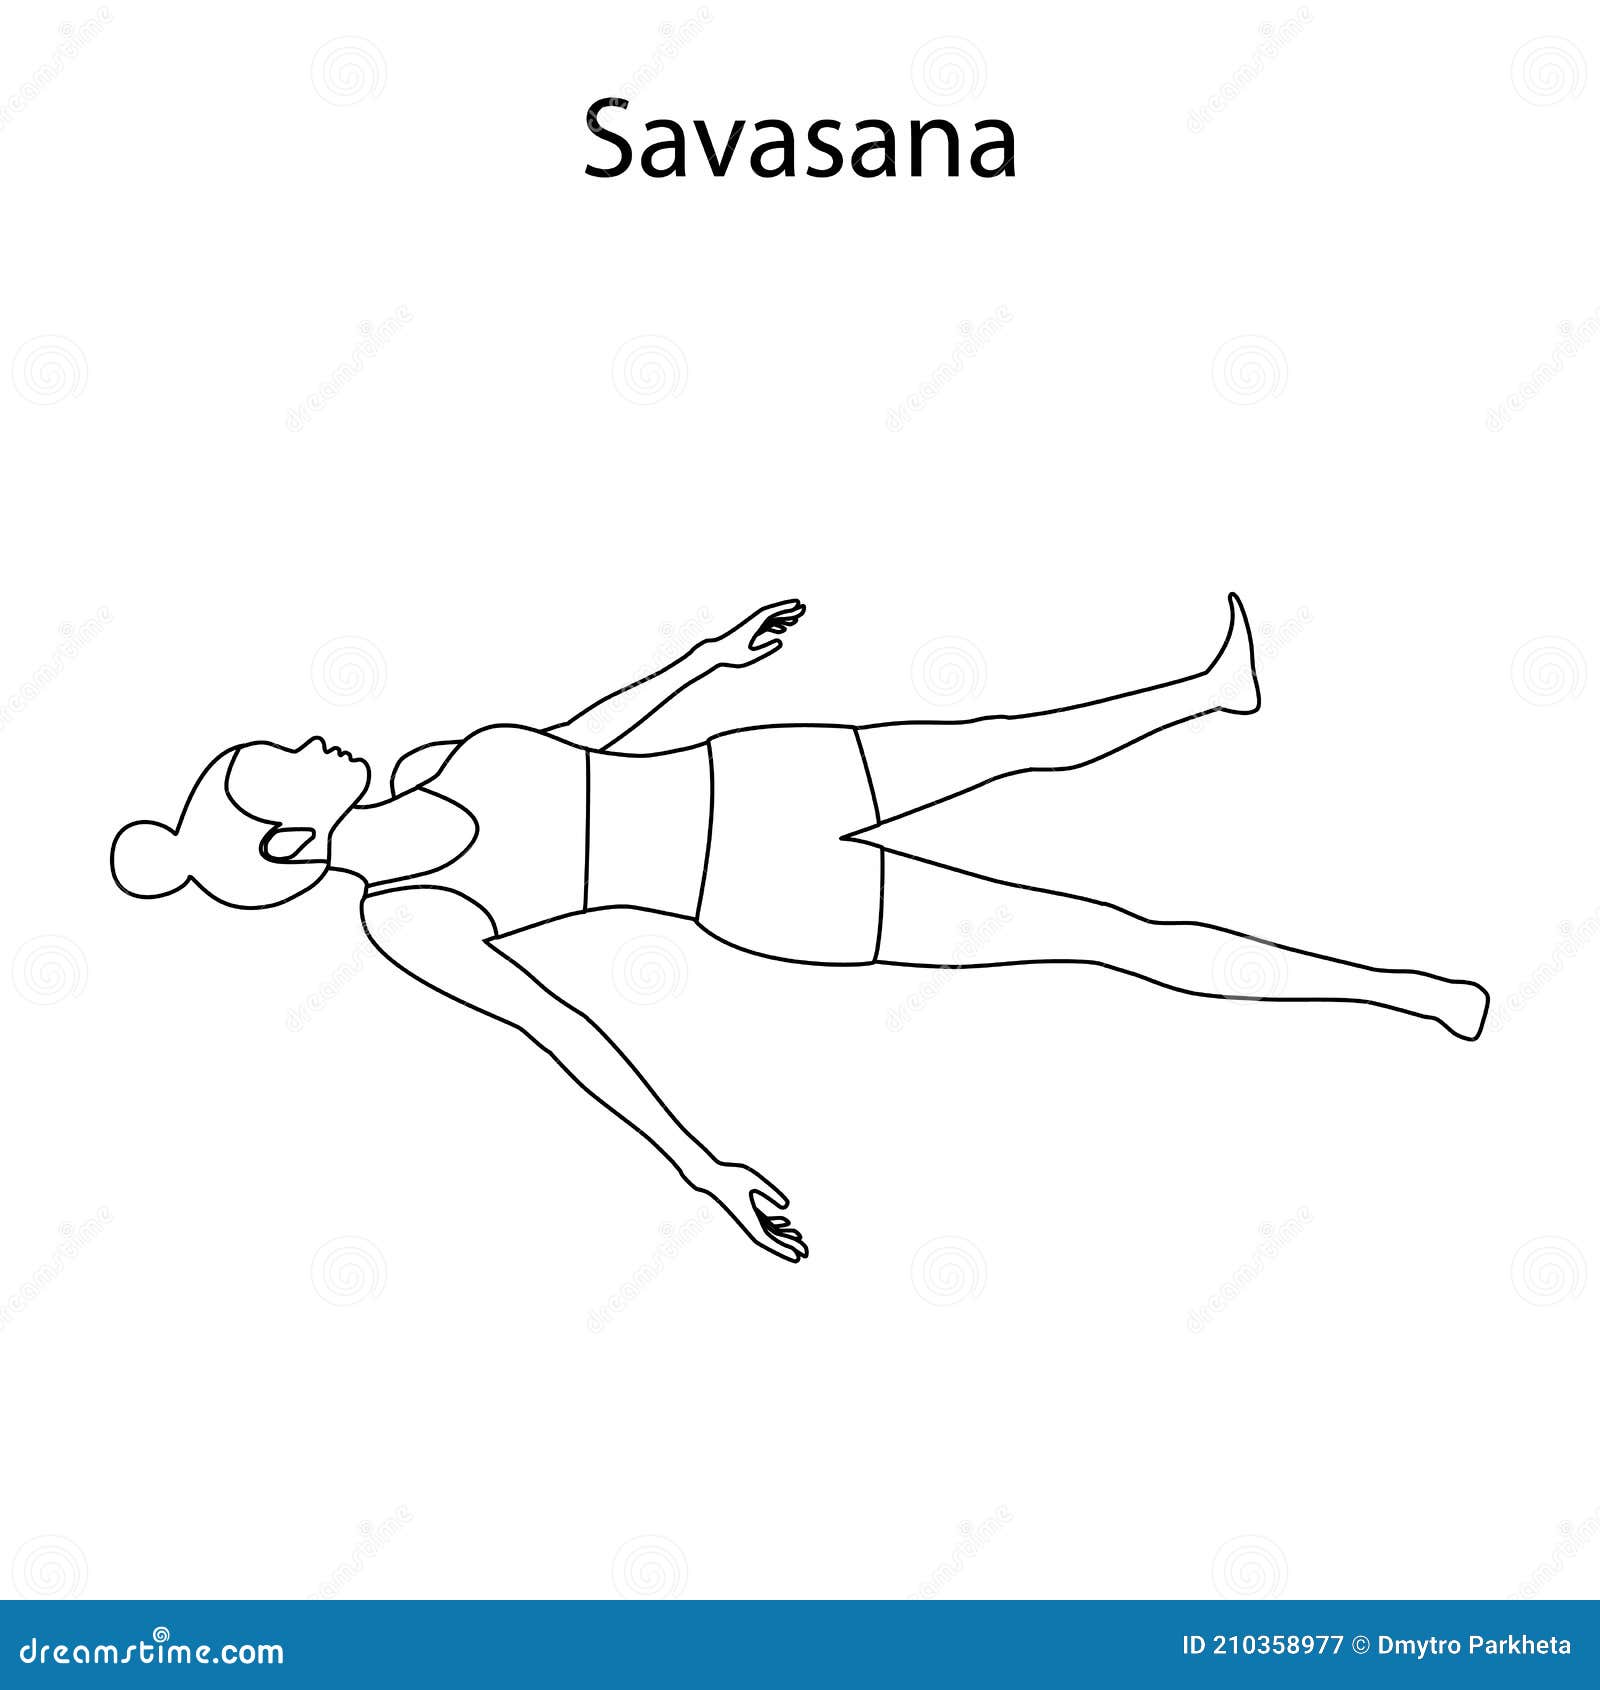 7. Yogic Exercises for Reiki Professionals - Sawan Books